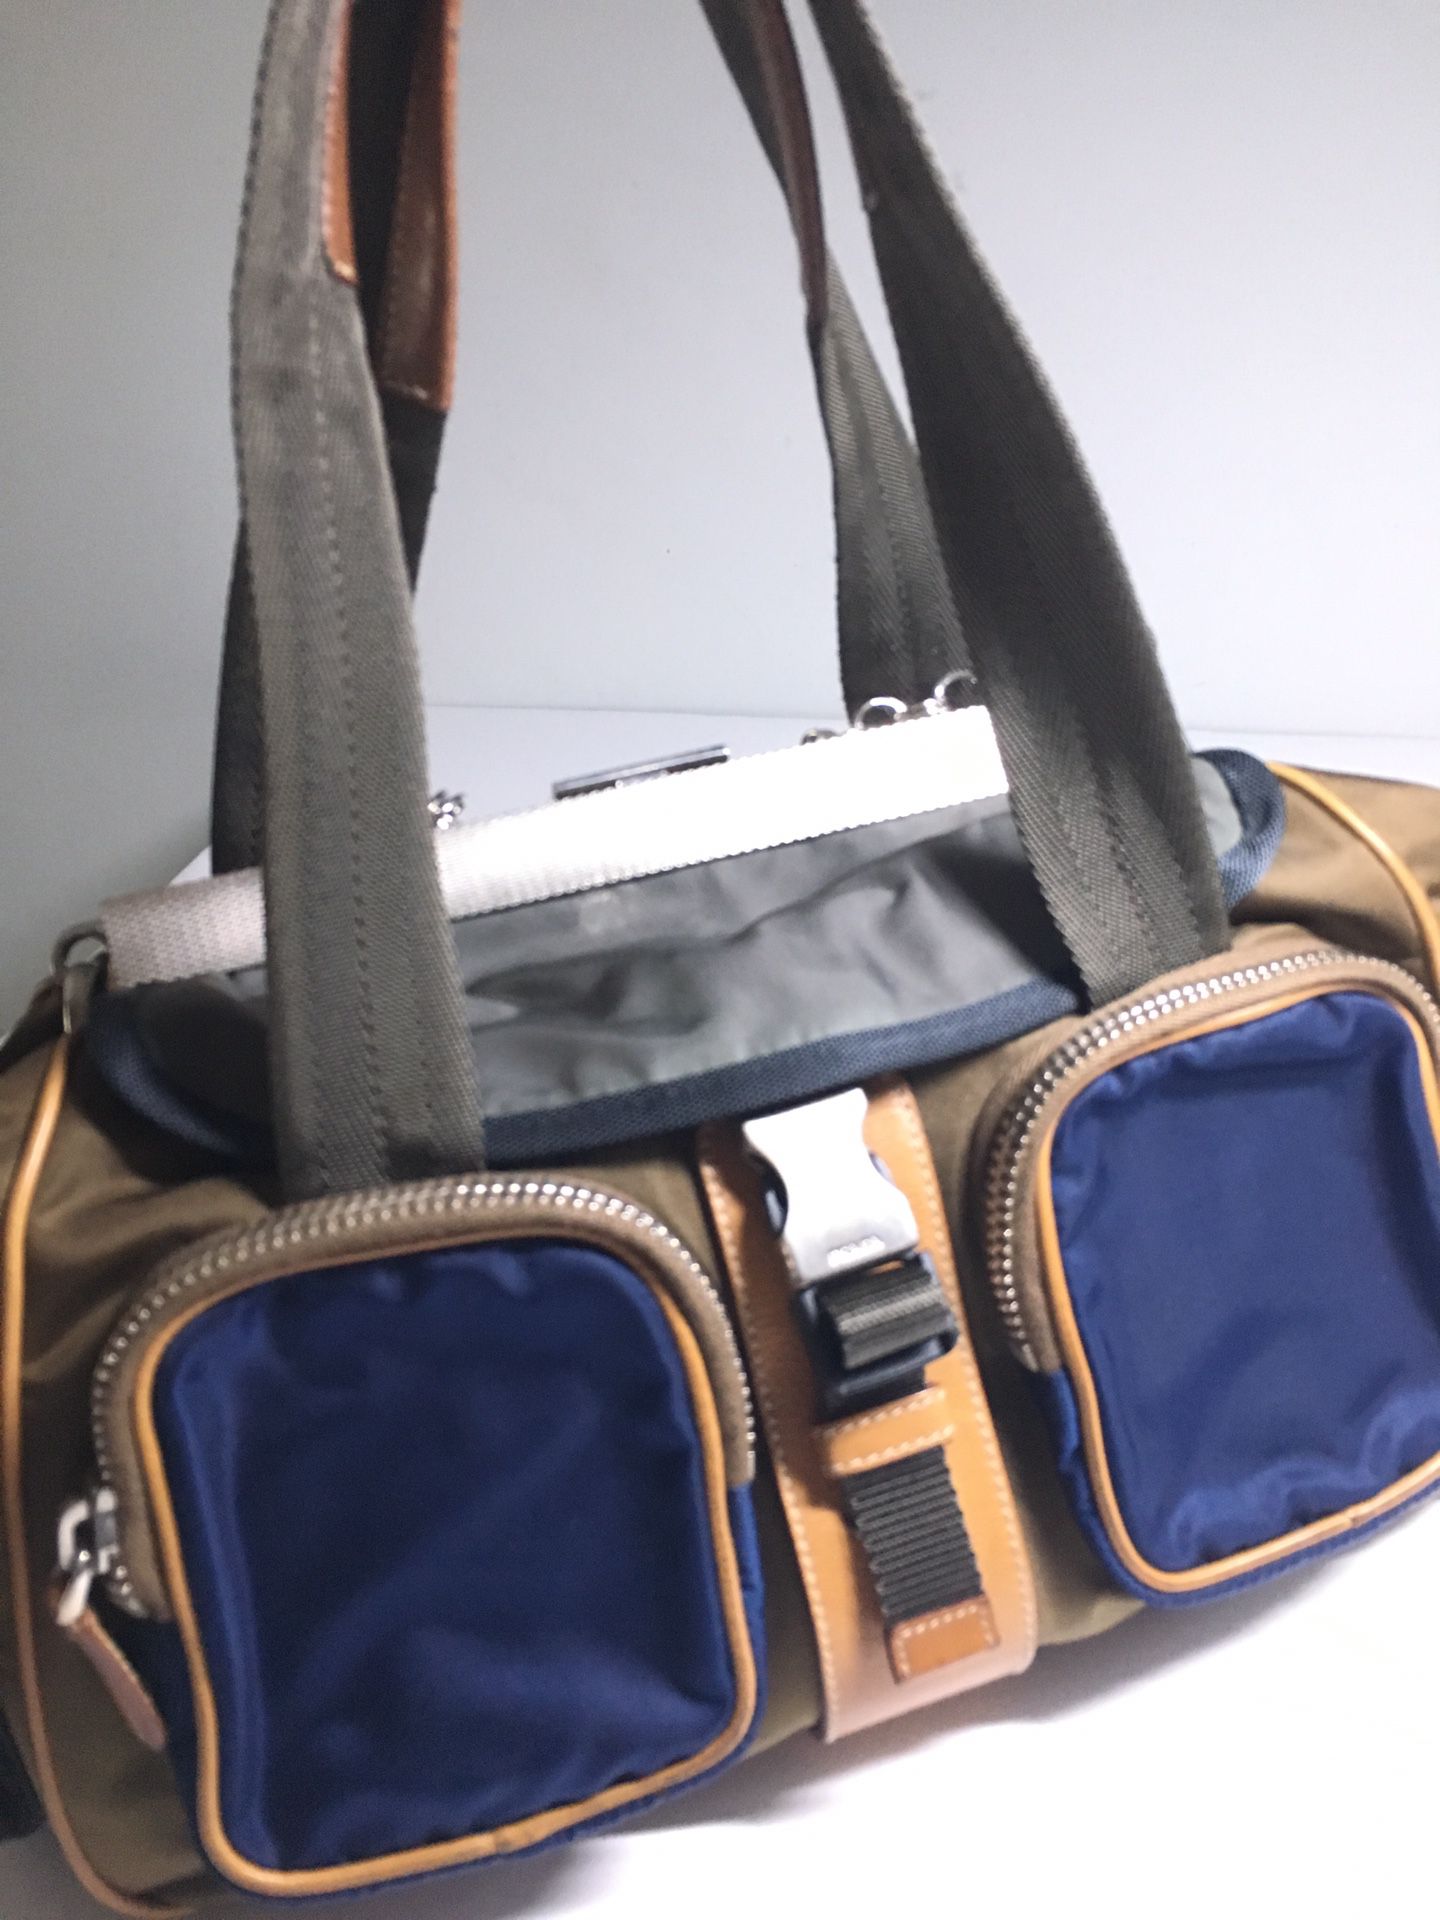 Prada nylon/leather sporty bag - authentic